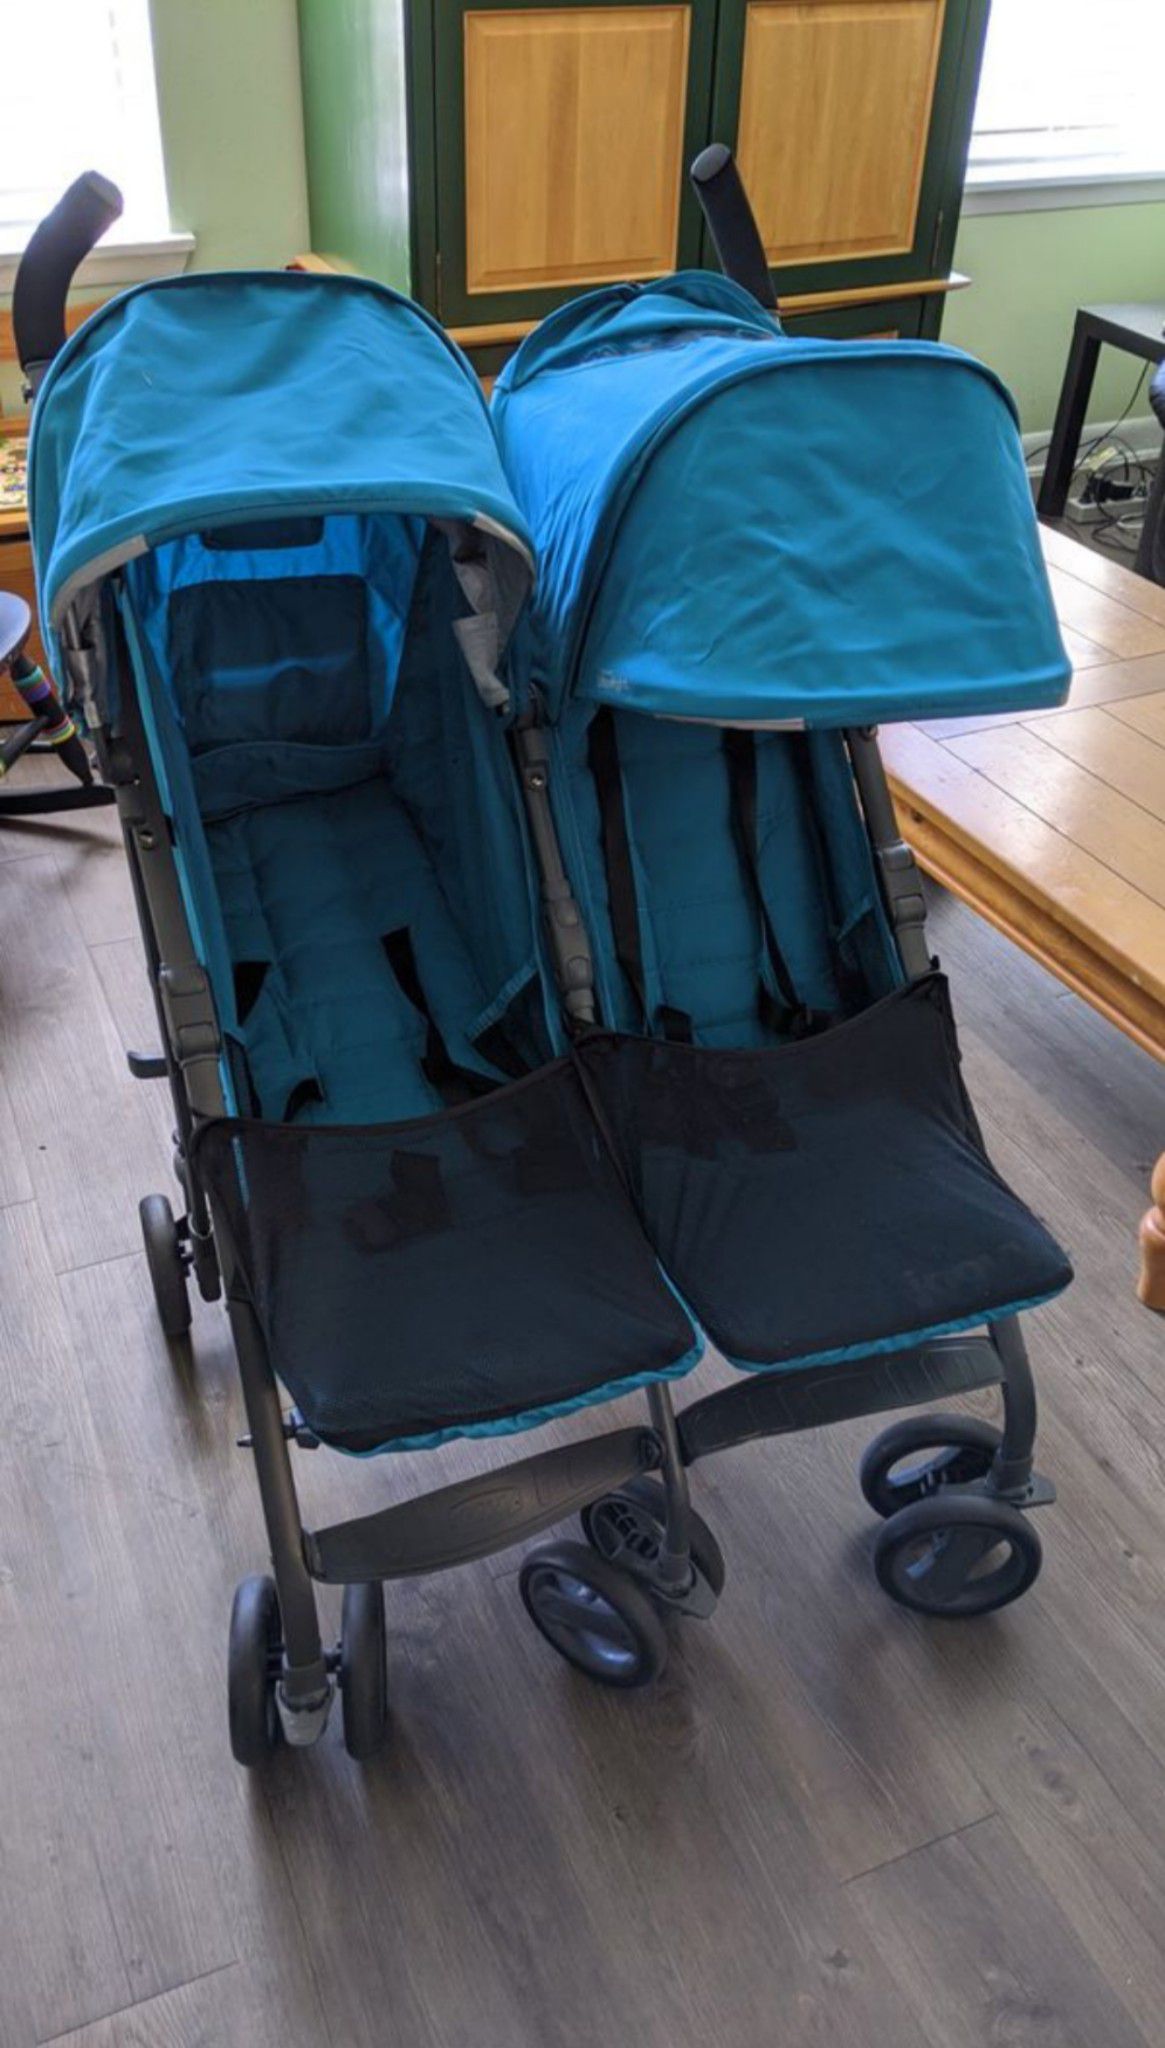 Brand New Joovy Double stroller - no ware!